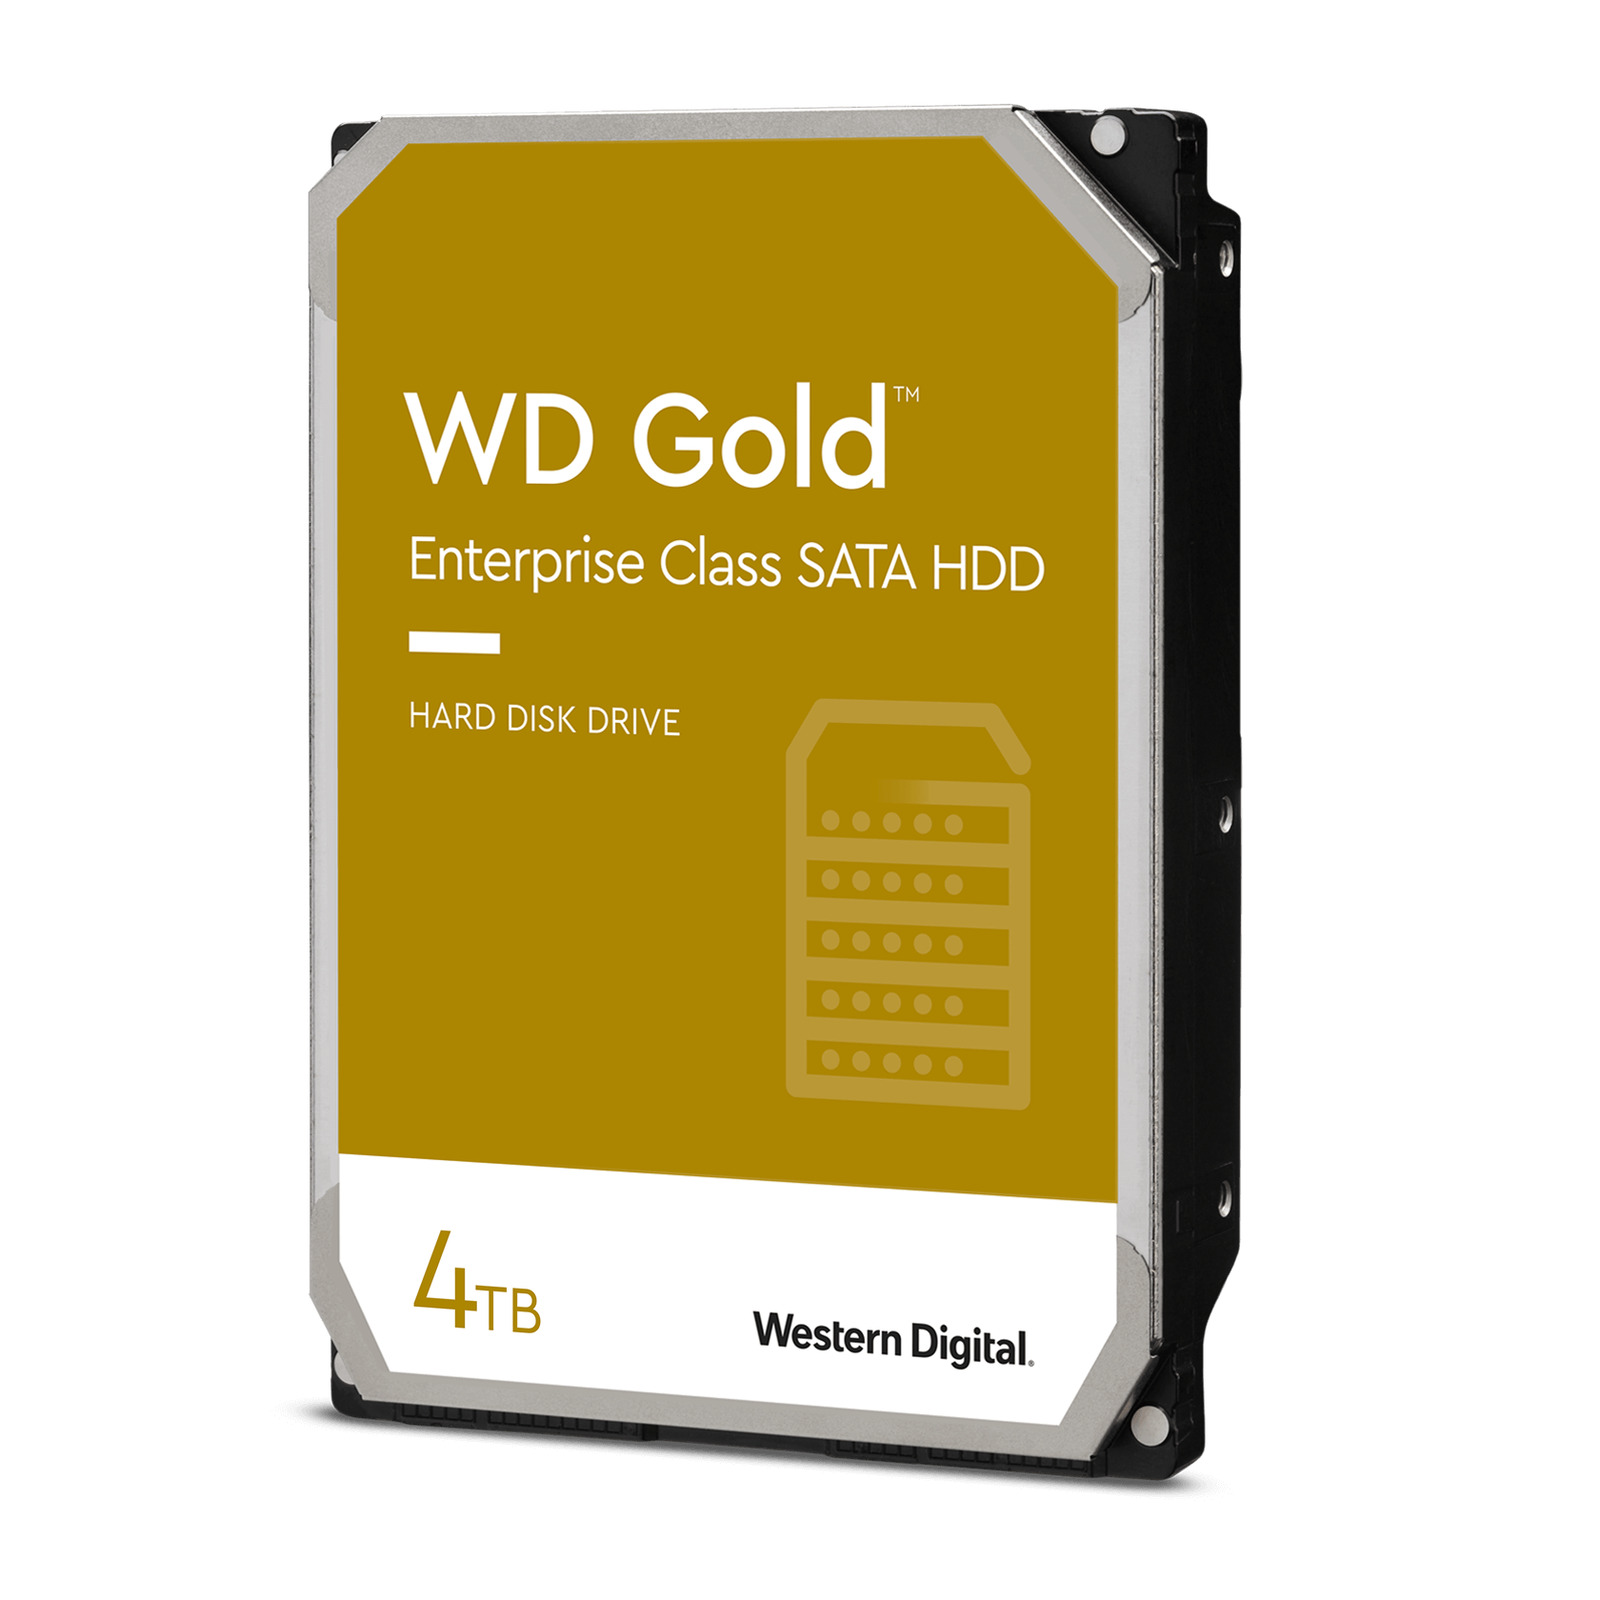 Western Digital 4TB WD Gold Enterprise Class SATA Internal Hard Drive WD4003FRYZ